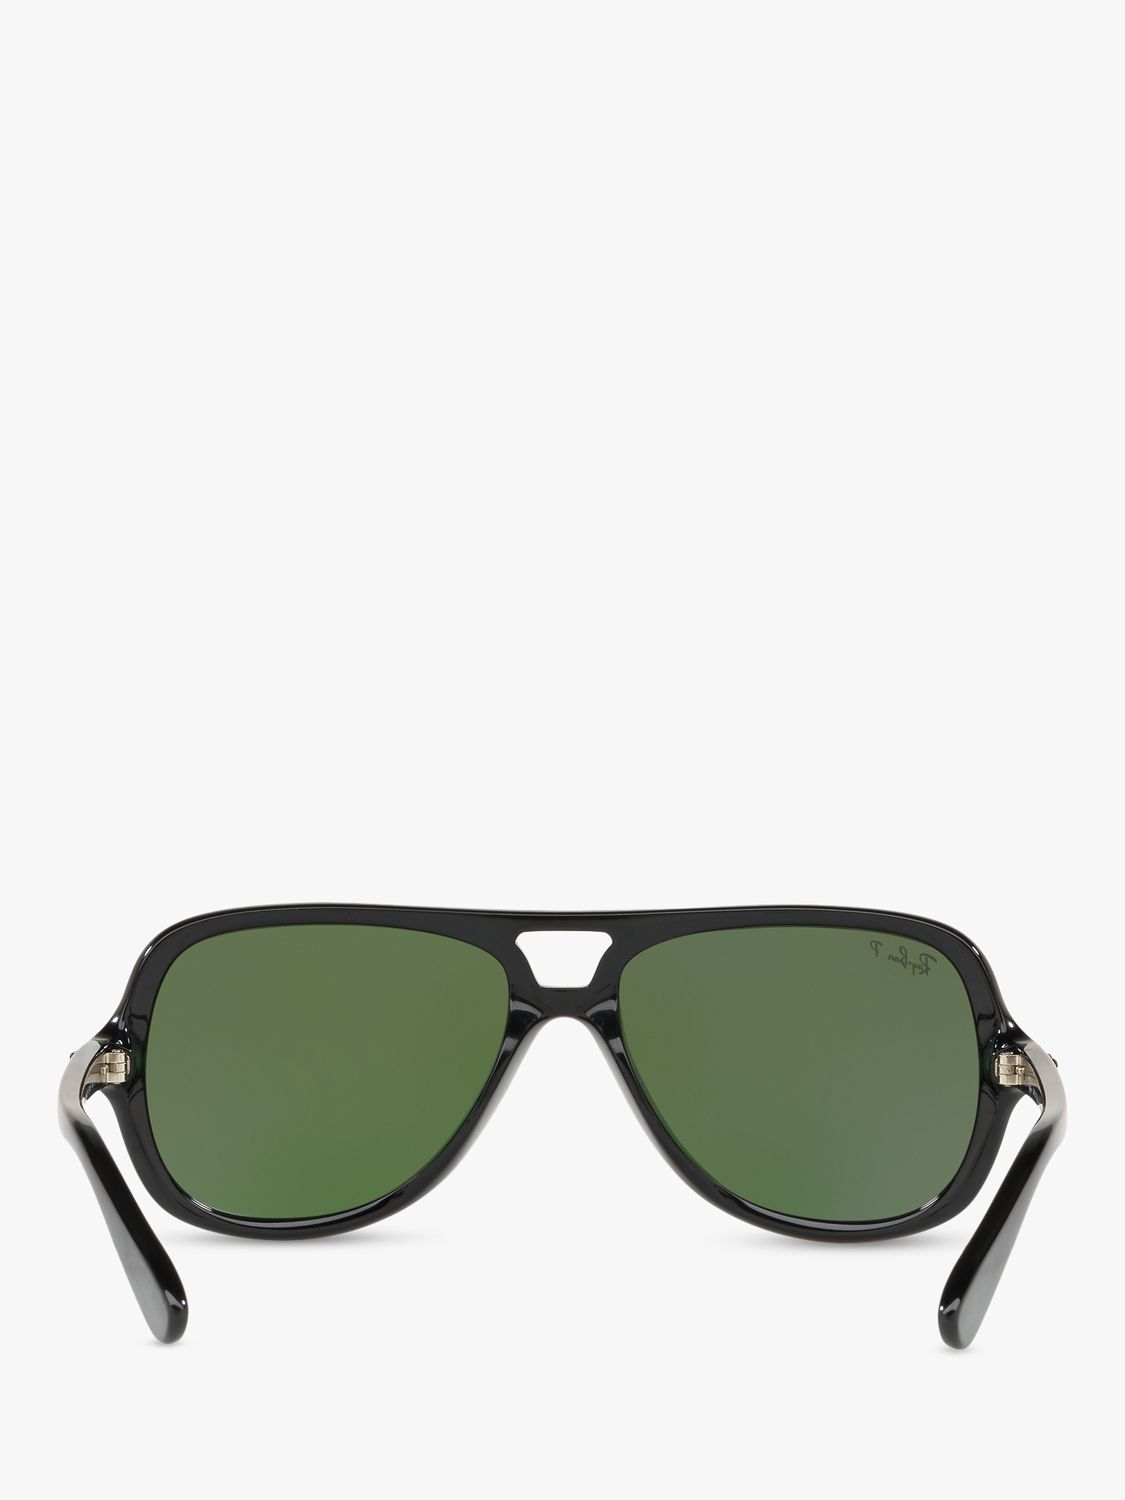 Buy Ray-Ban RB4162 Men's Polarised Aviator Sunglasses, Black/Green Online at johnlewis.com